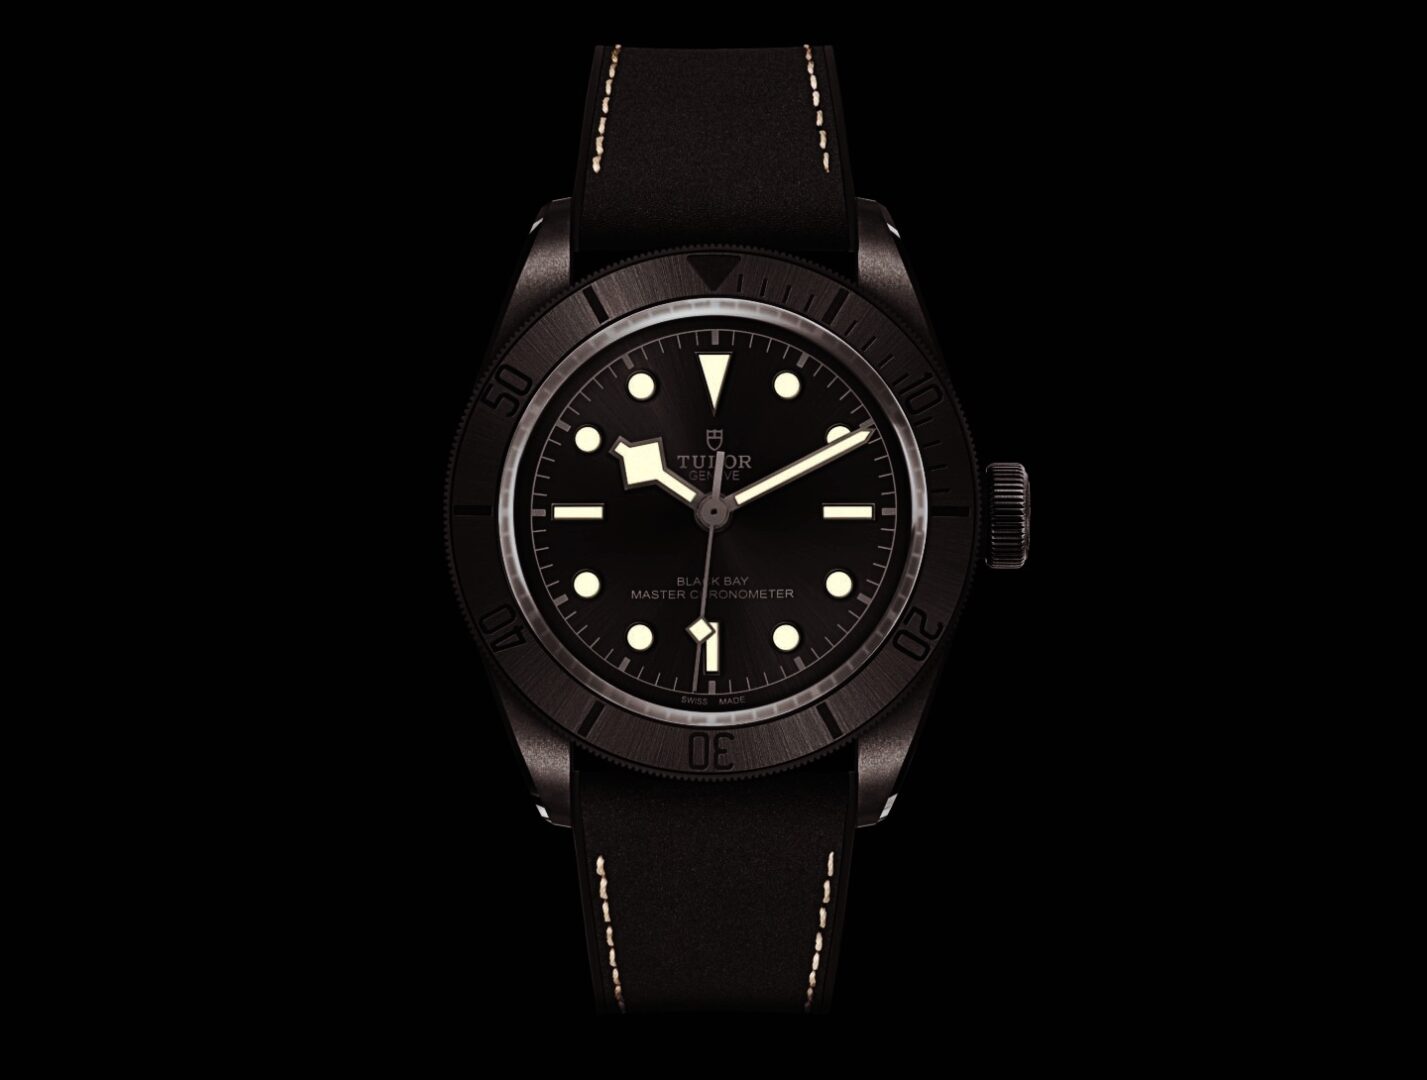 Tudor Black Bay Ceramic winning watch of the Petite Aiguille Prize 2021 1440x1440 1